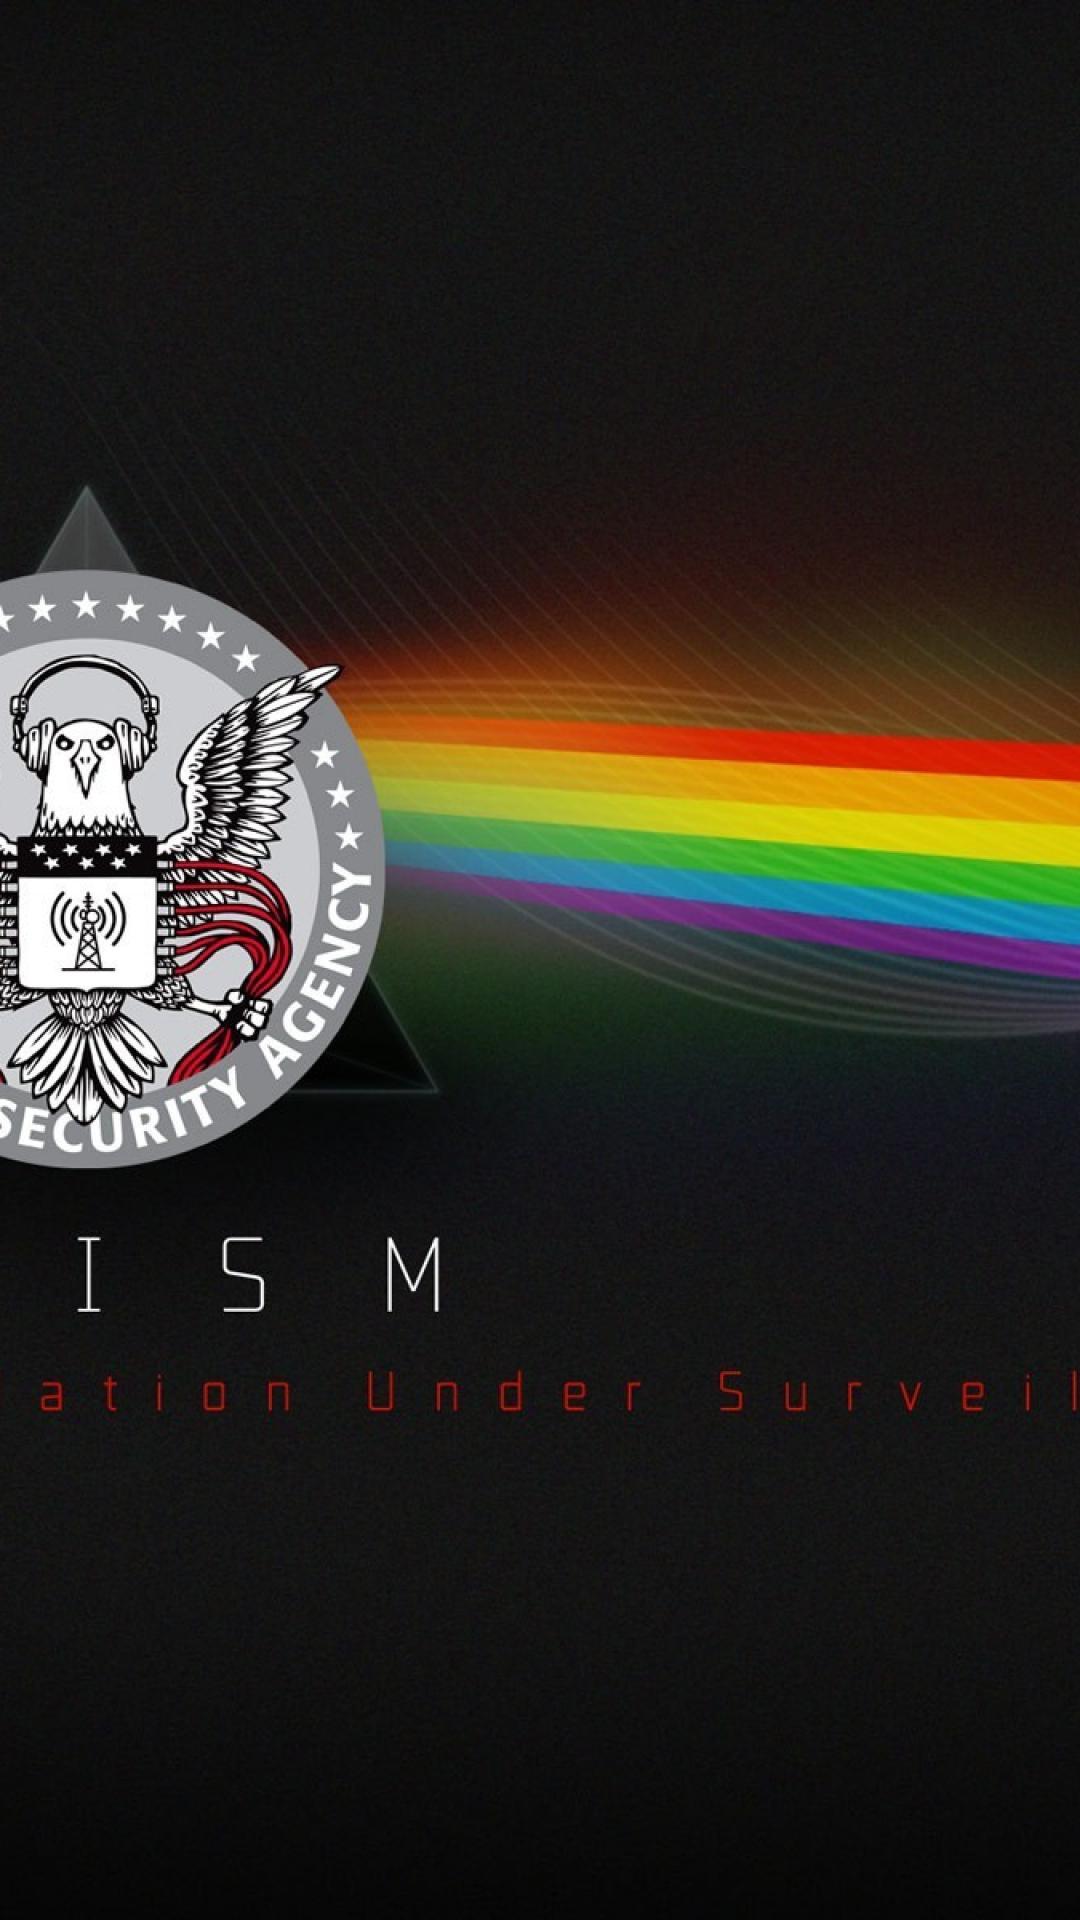 Government nsa prism surveillance Wallpaper